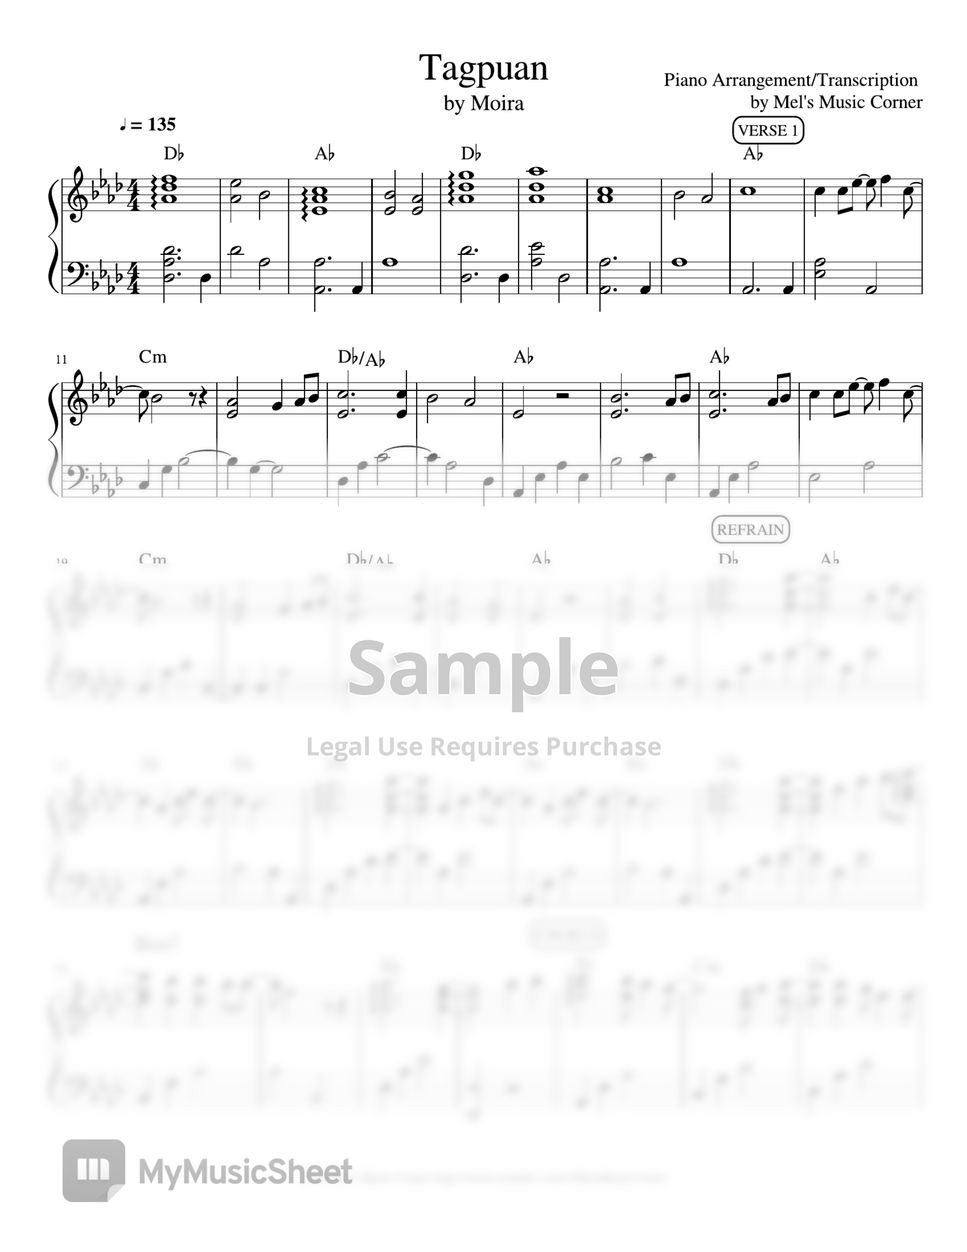 Moira dela Torre - Tagpuan (piano sheet music) by Mel's Music Corner